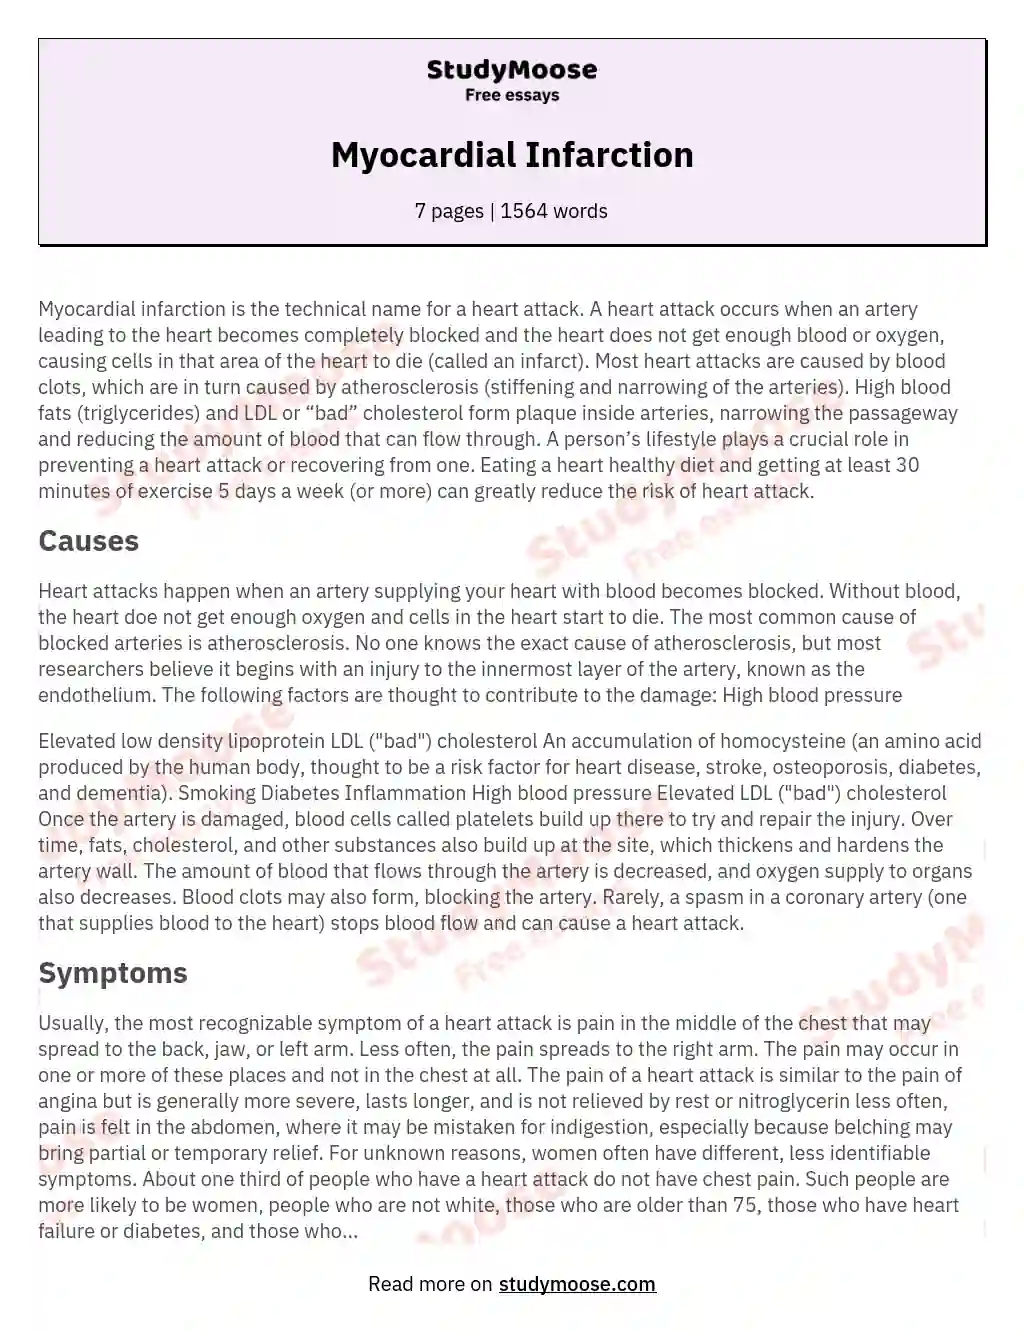 Myocardial Infarction essay